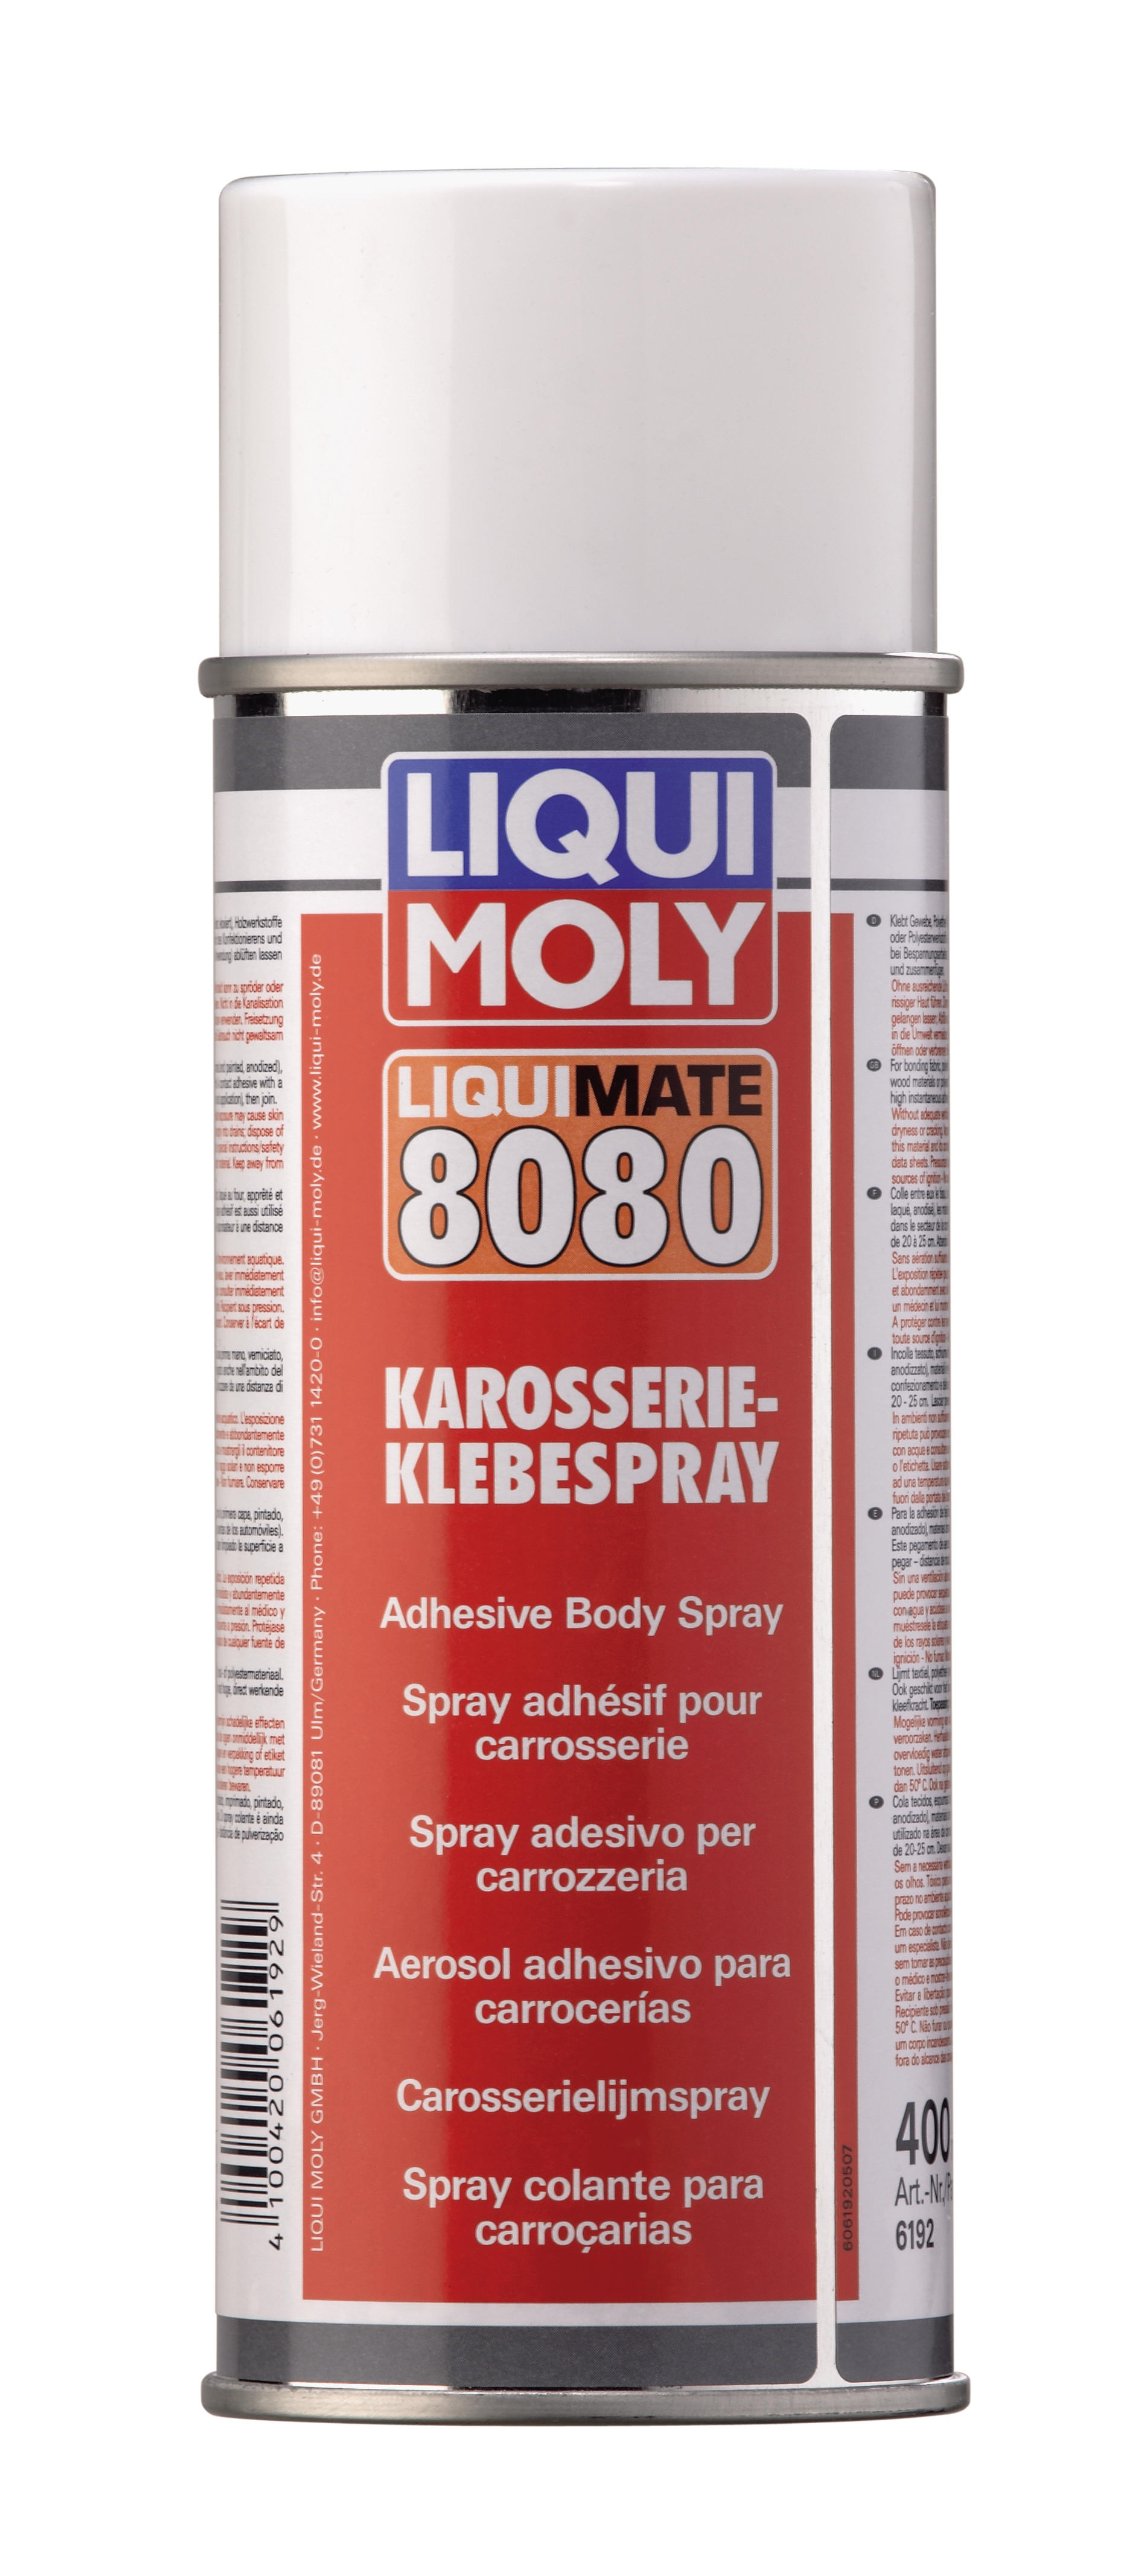 LIQUI MOLY Karosserie-Klebespray | 400 ml | Klebstoff | Art.-Nr.: 6192 von Liqui Moly